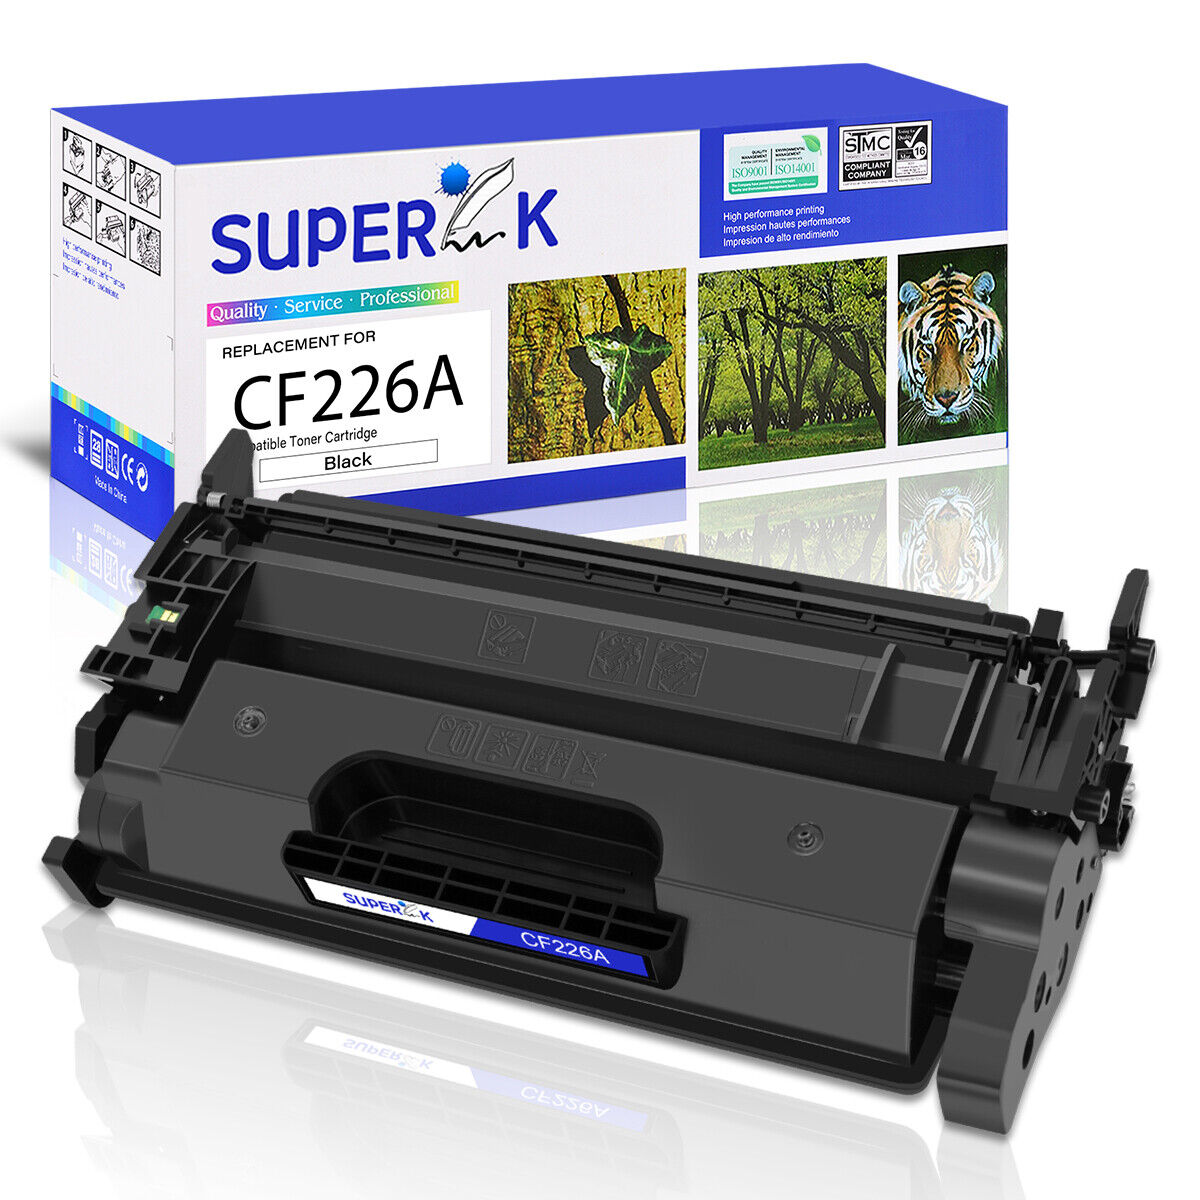 CF226A 26A Toner Cartridge for HP 26A LaserJet Pro MFP M426dw M426fdn M402dw LOT